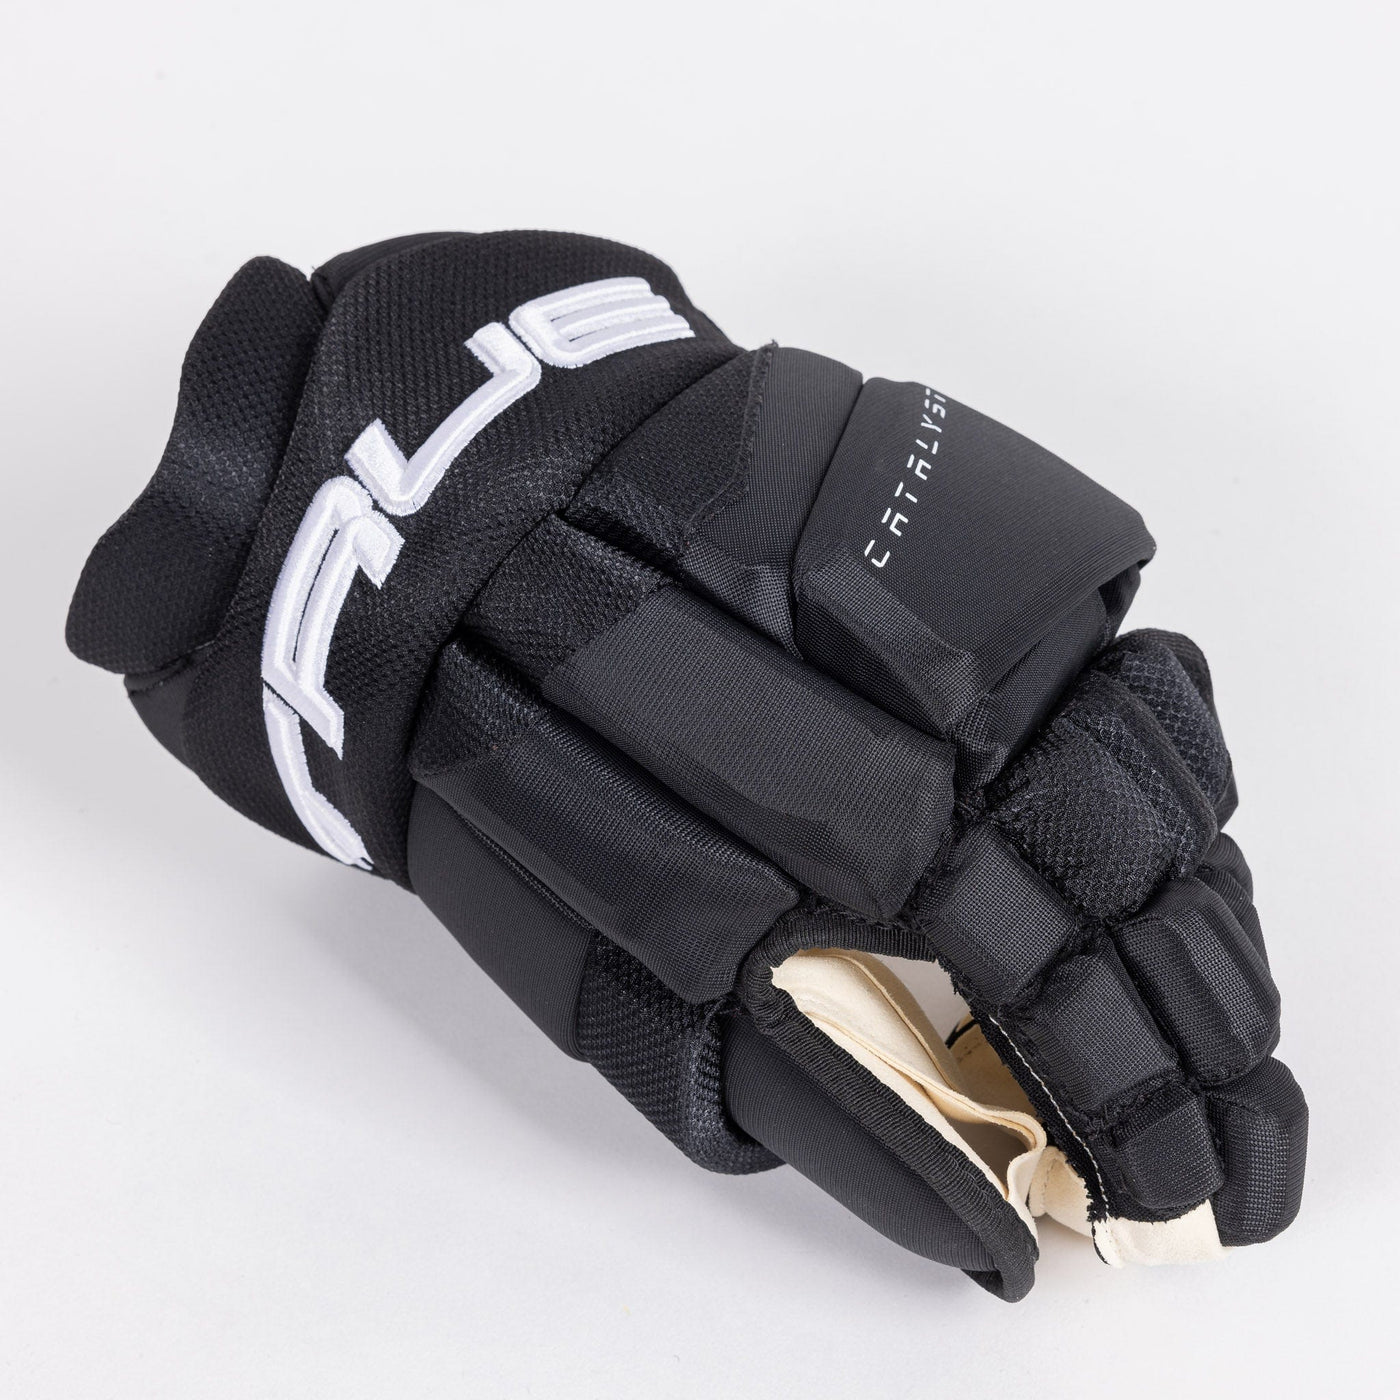 TRUE Catalyst Pro Stock Senior Hockey Glove - Winnipeg - The Hockey Shop Source For Sports